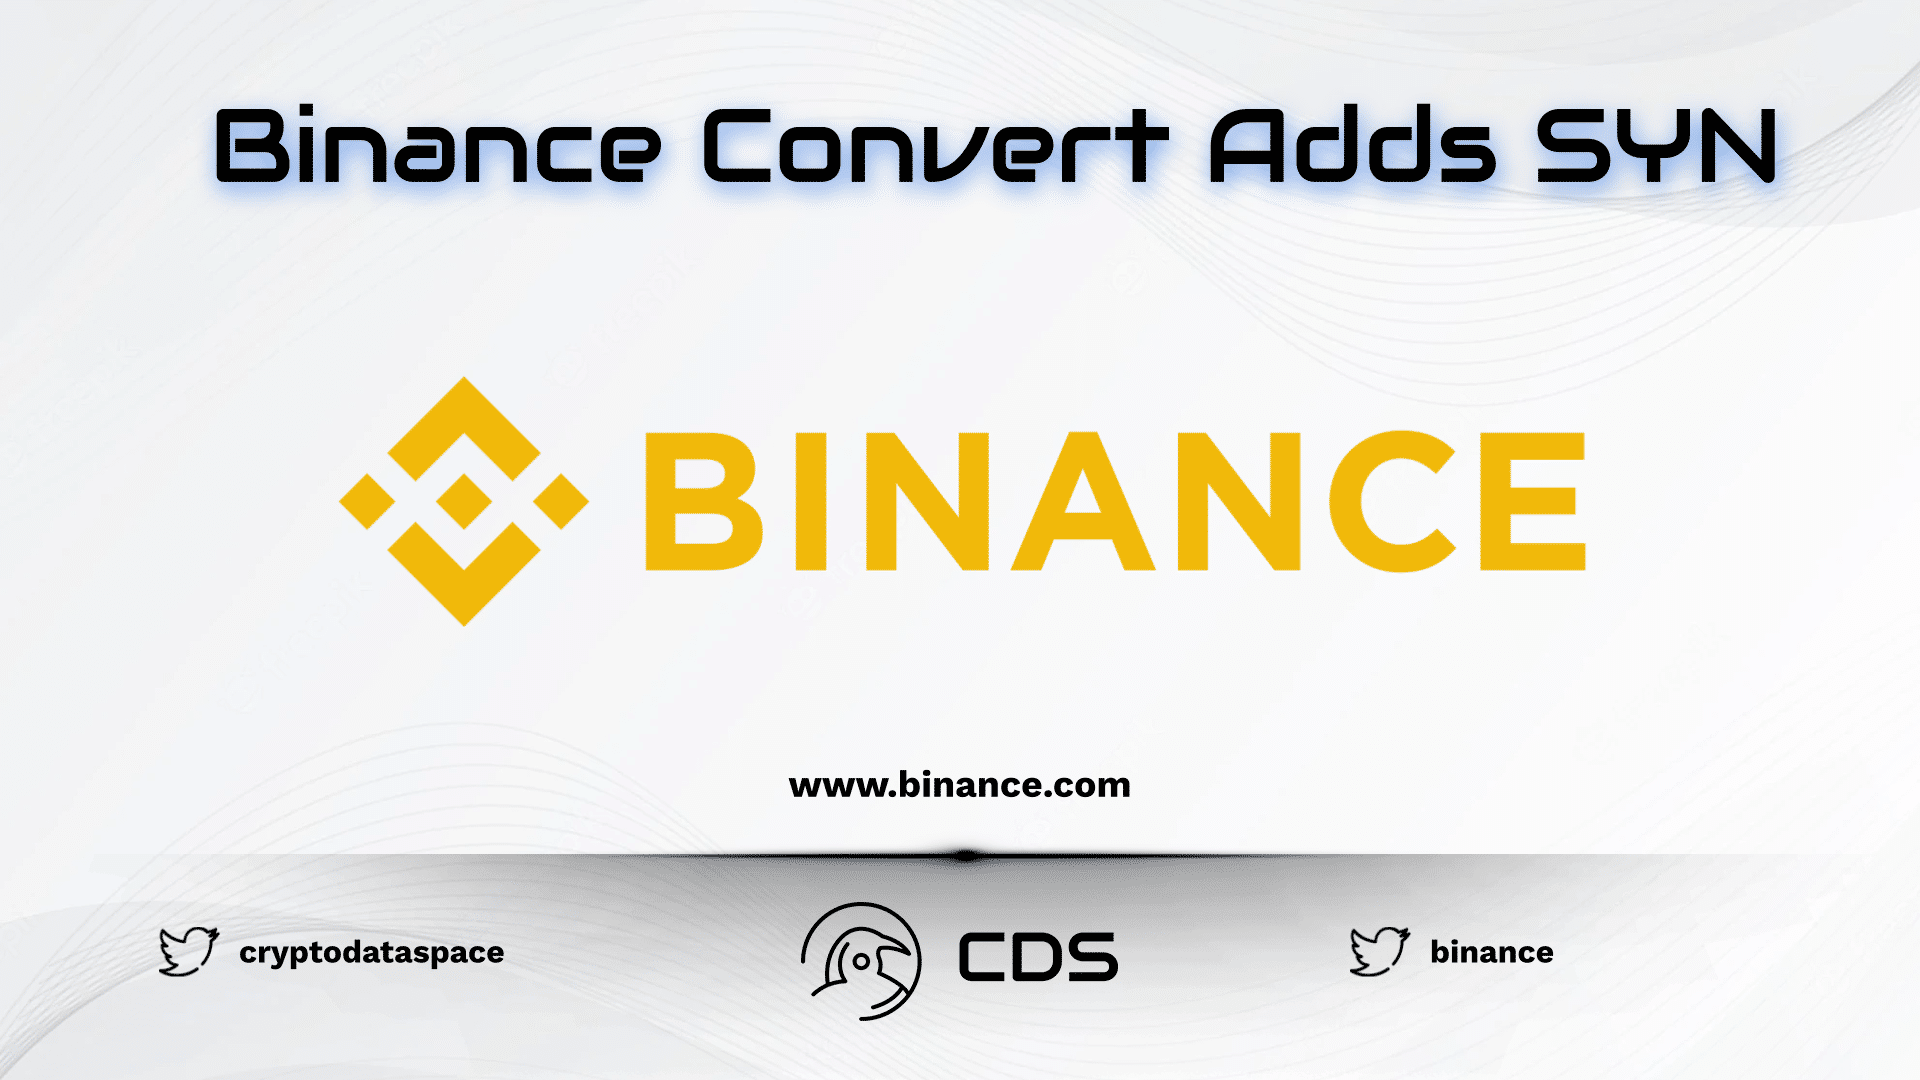 Binance Convert Adds SYN